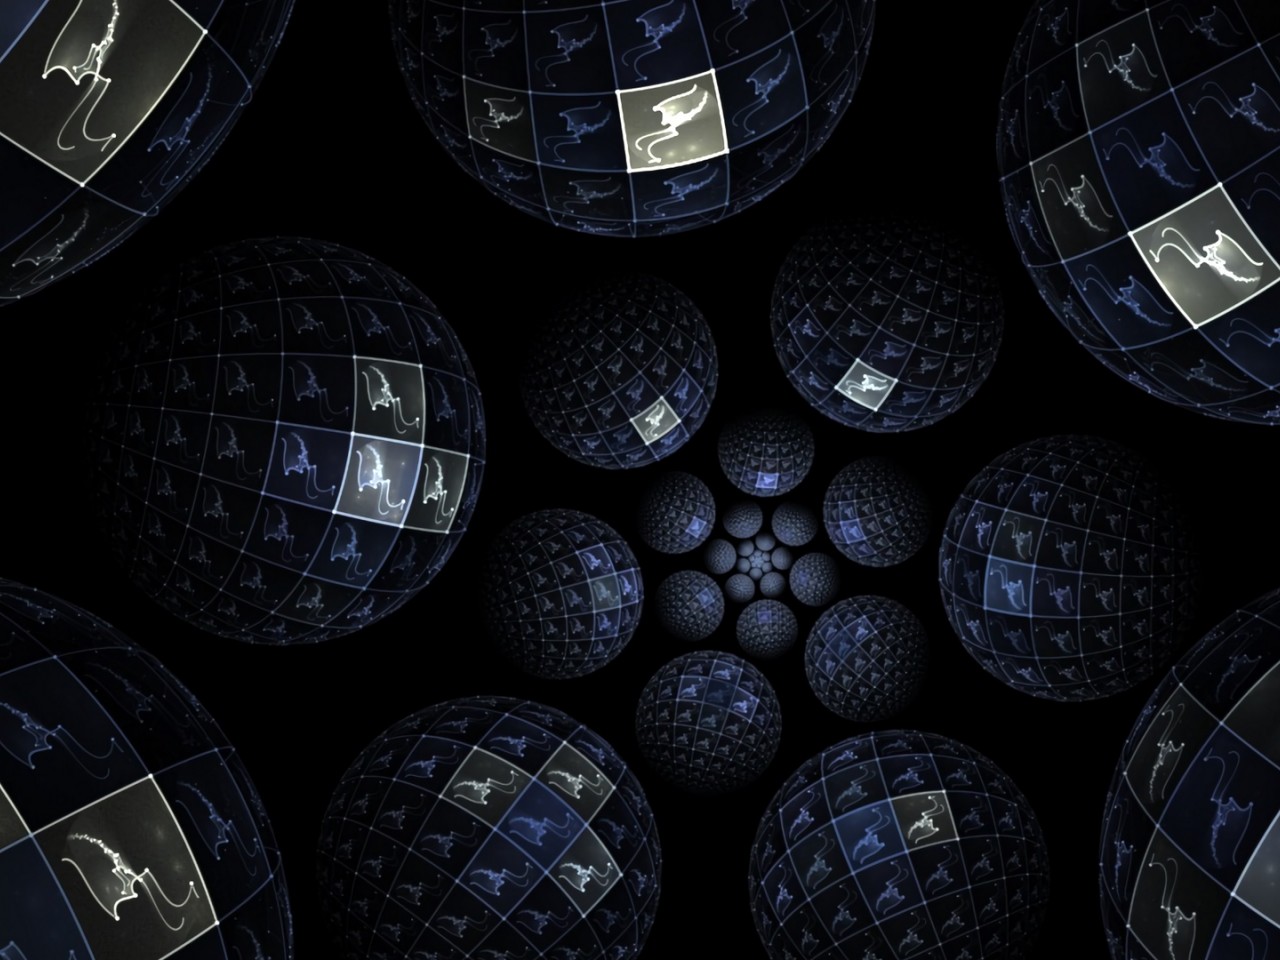 Dark fractal balls HD Wallpaper